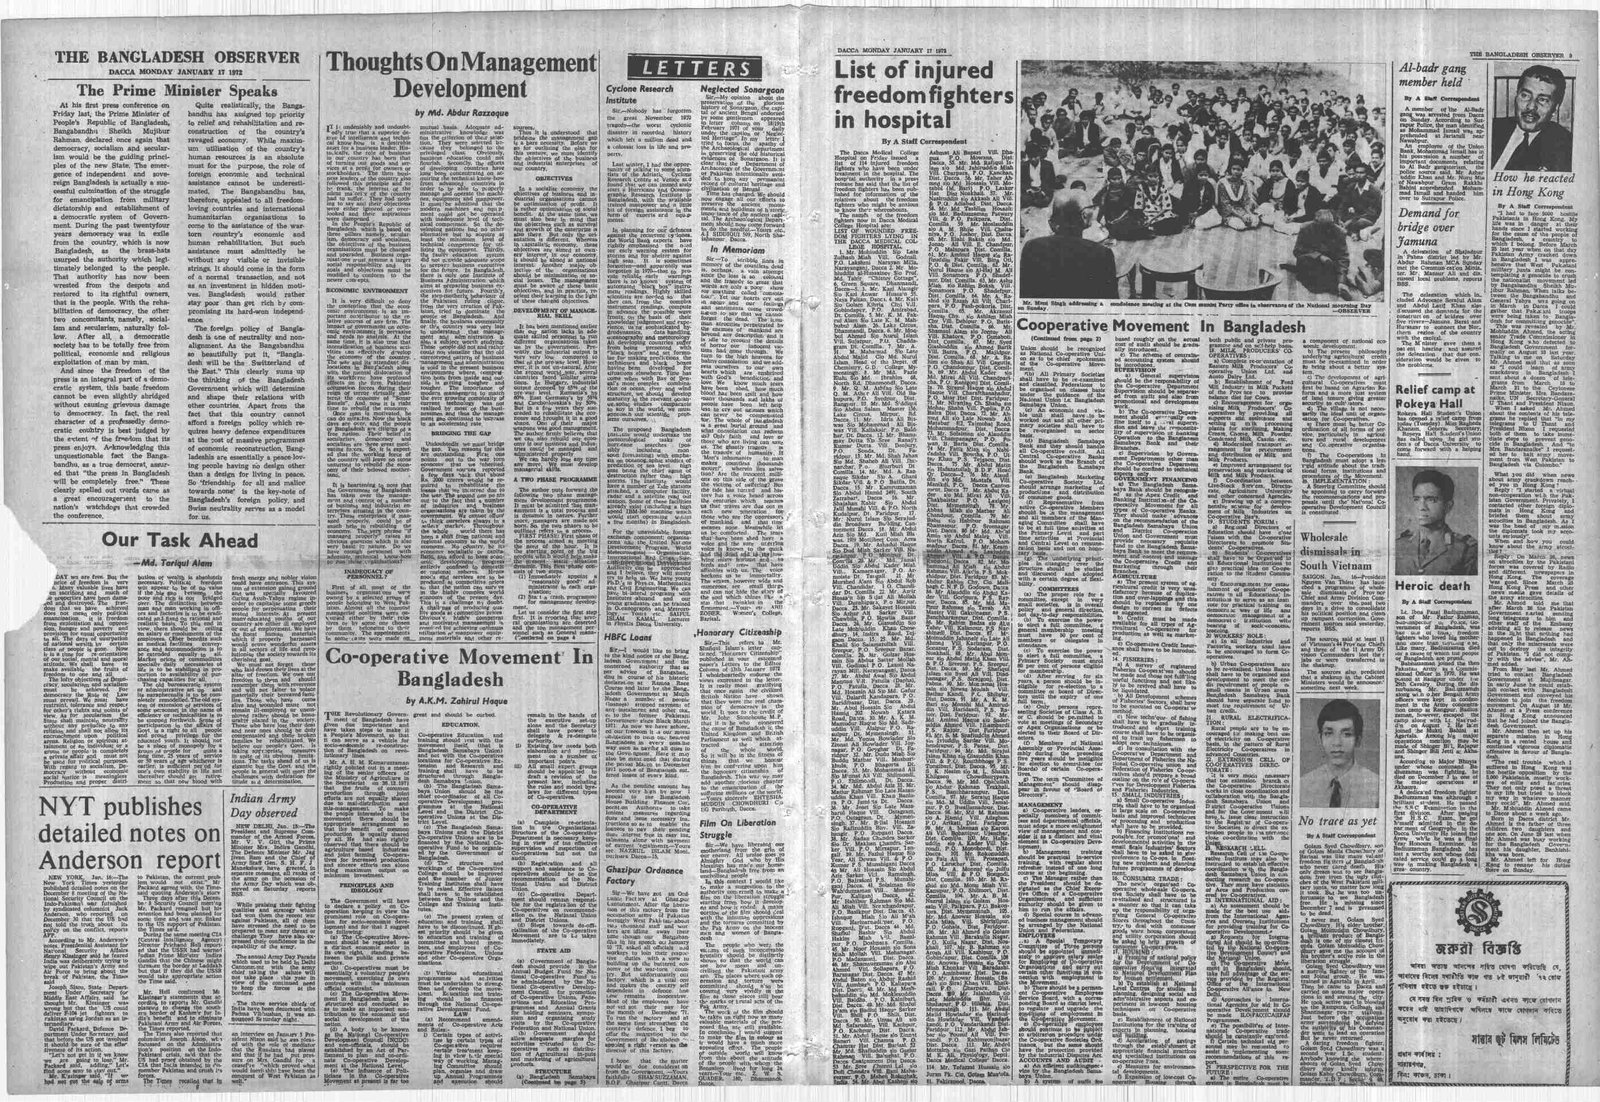 17JAN1972-Bangladesh Observer-Regular-Page 2 and 5